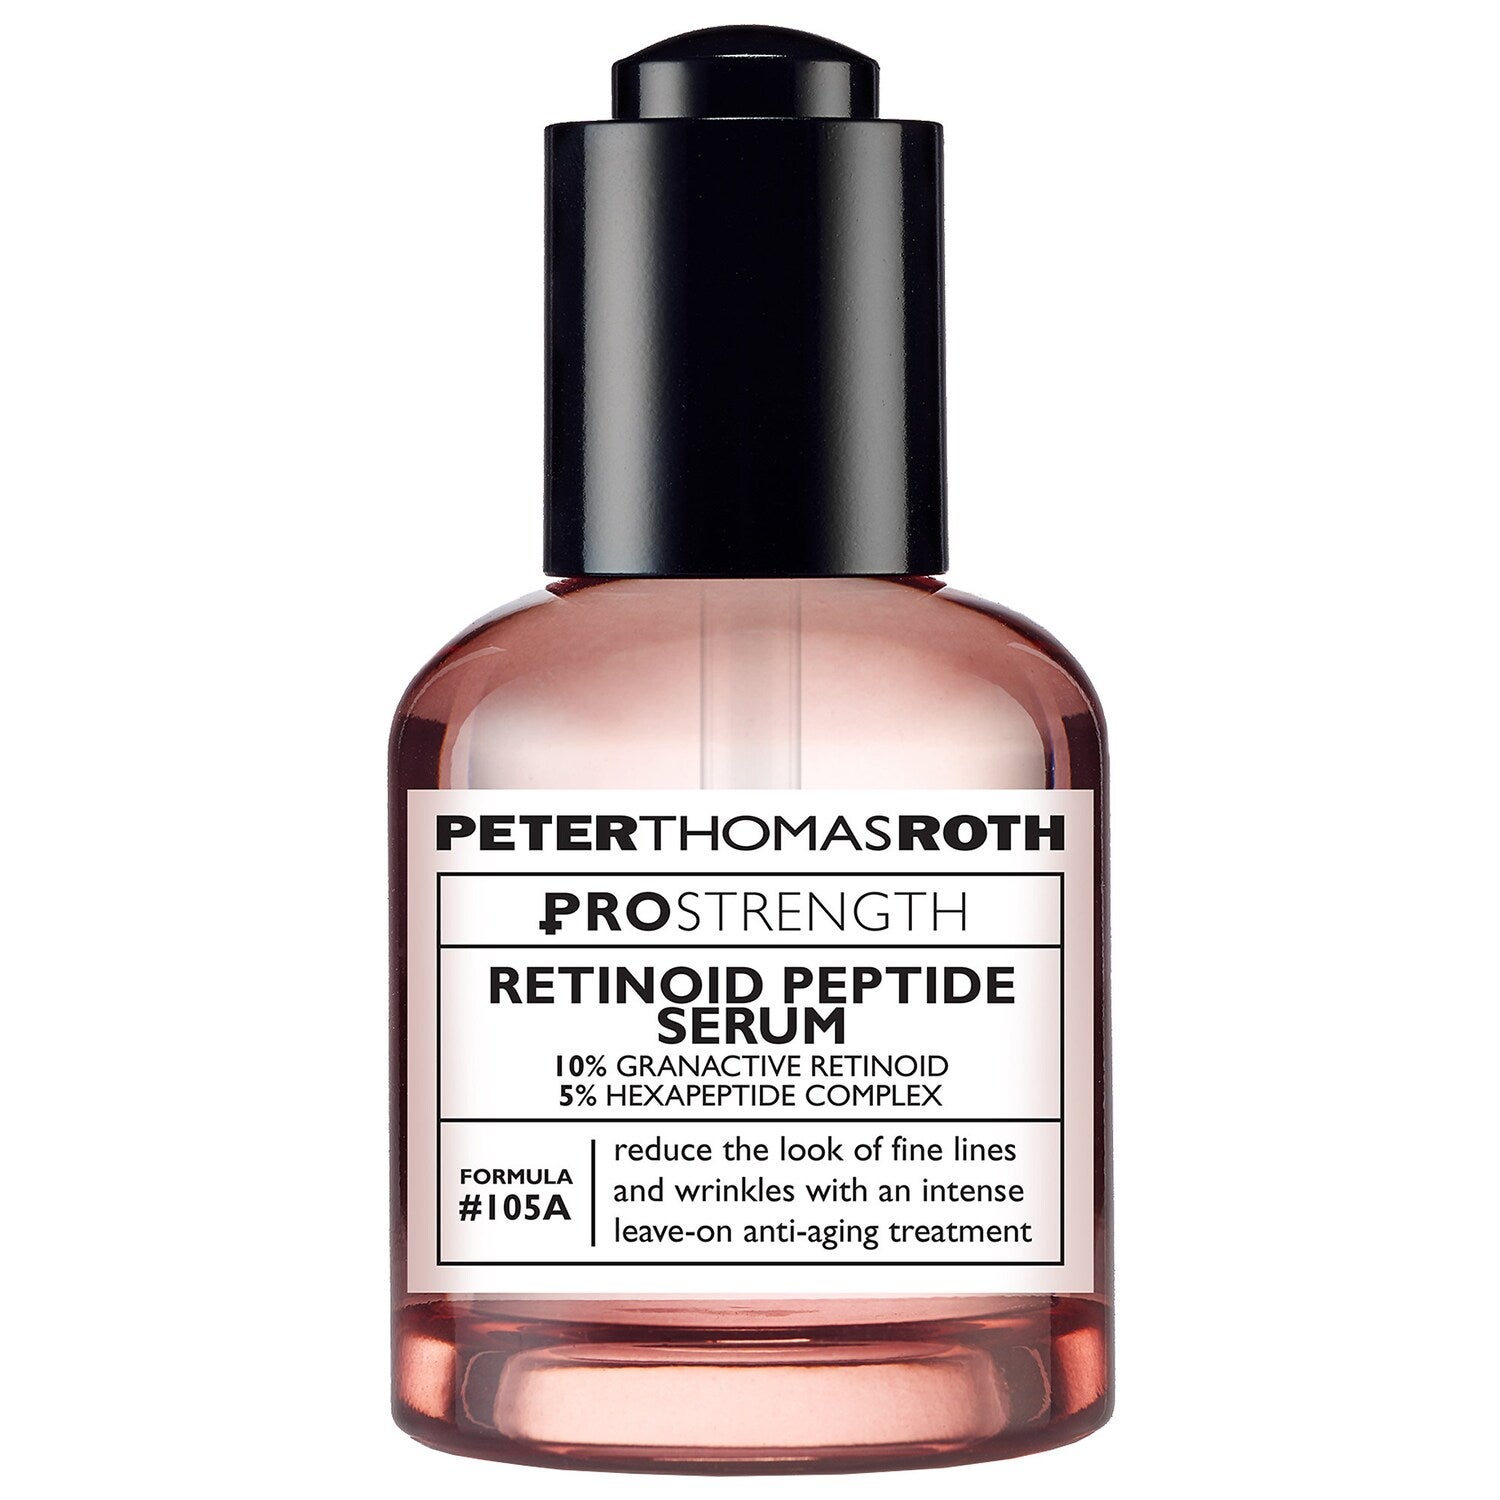 Peter Thomas Roth + Pro Strength Retinoid Peptide Serum